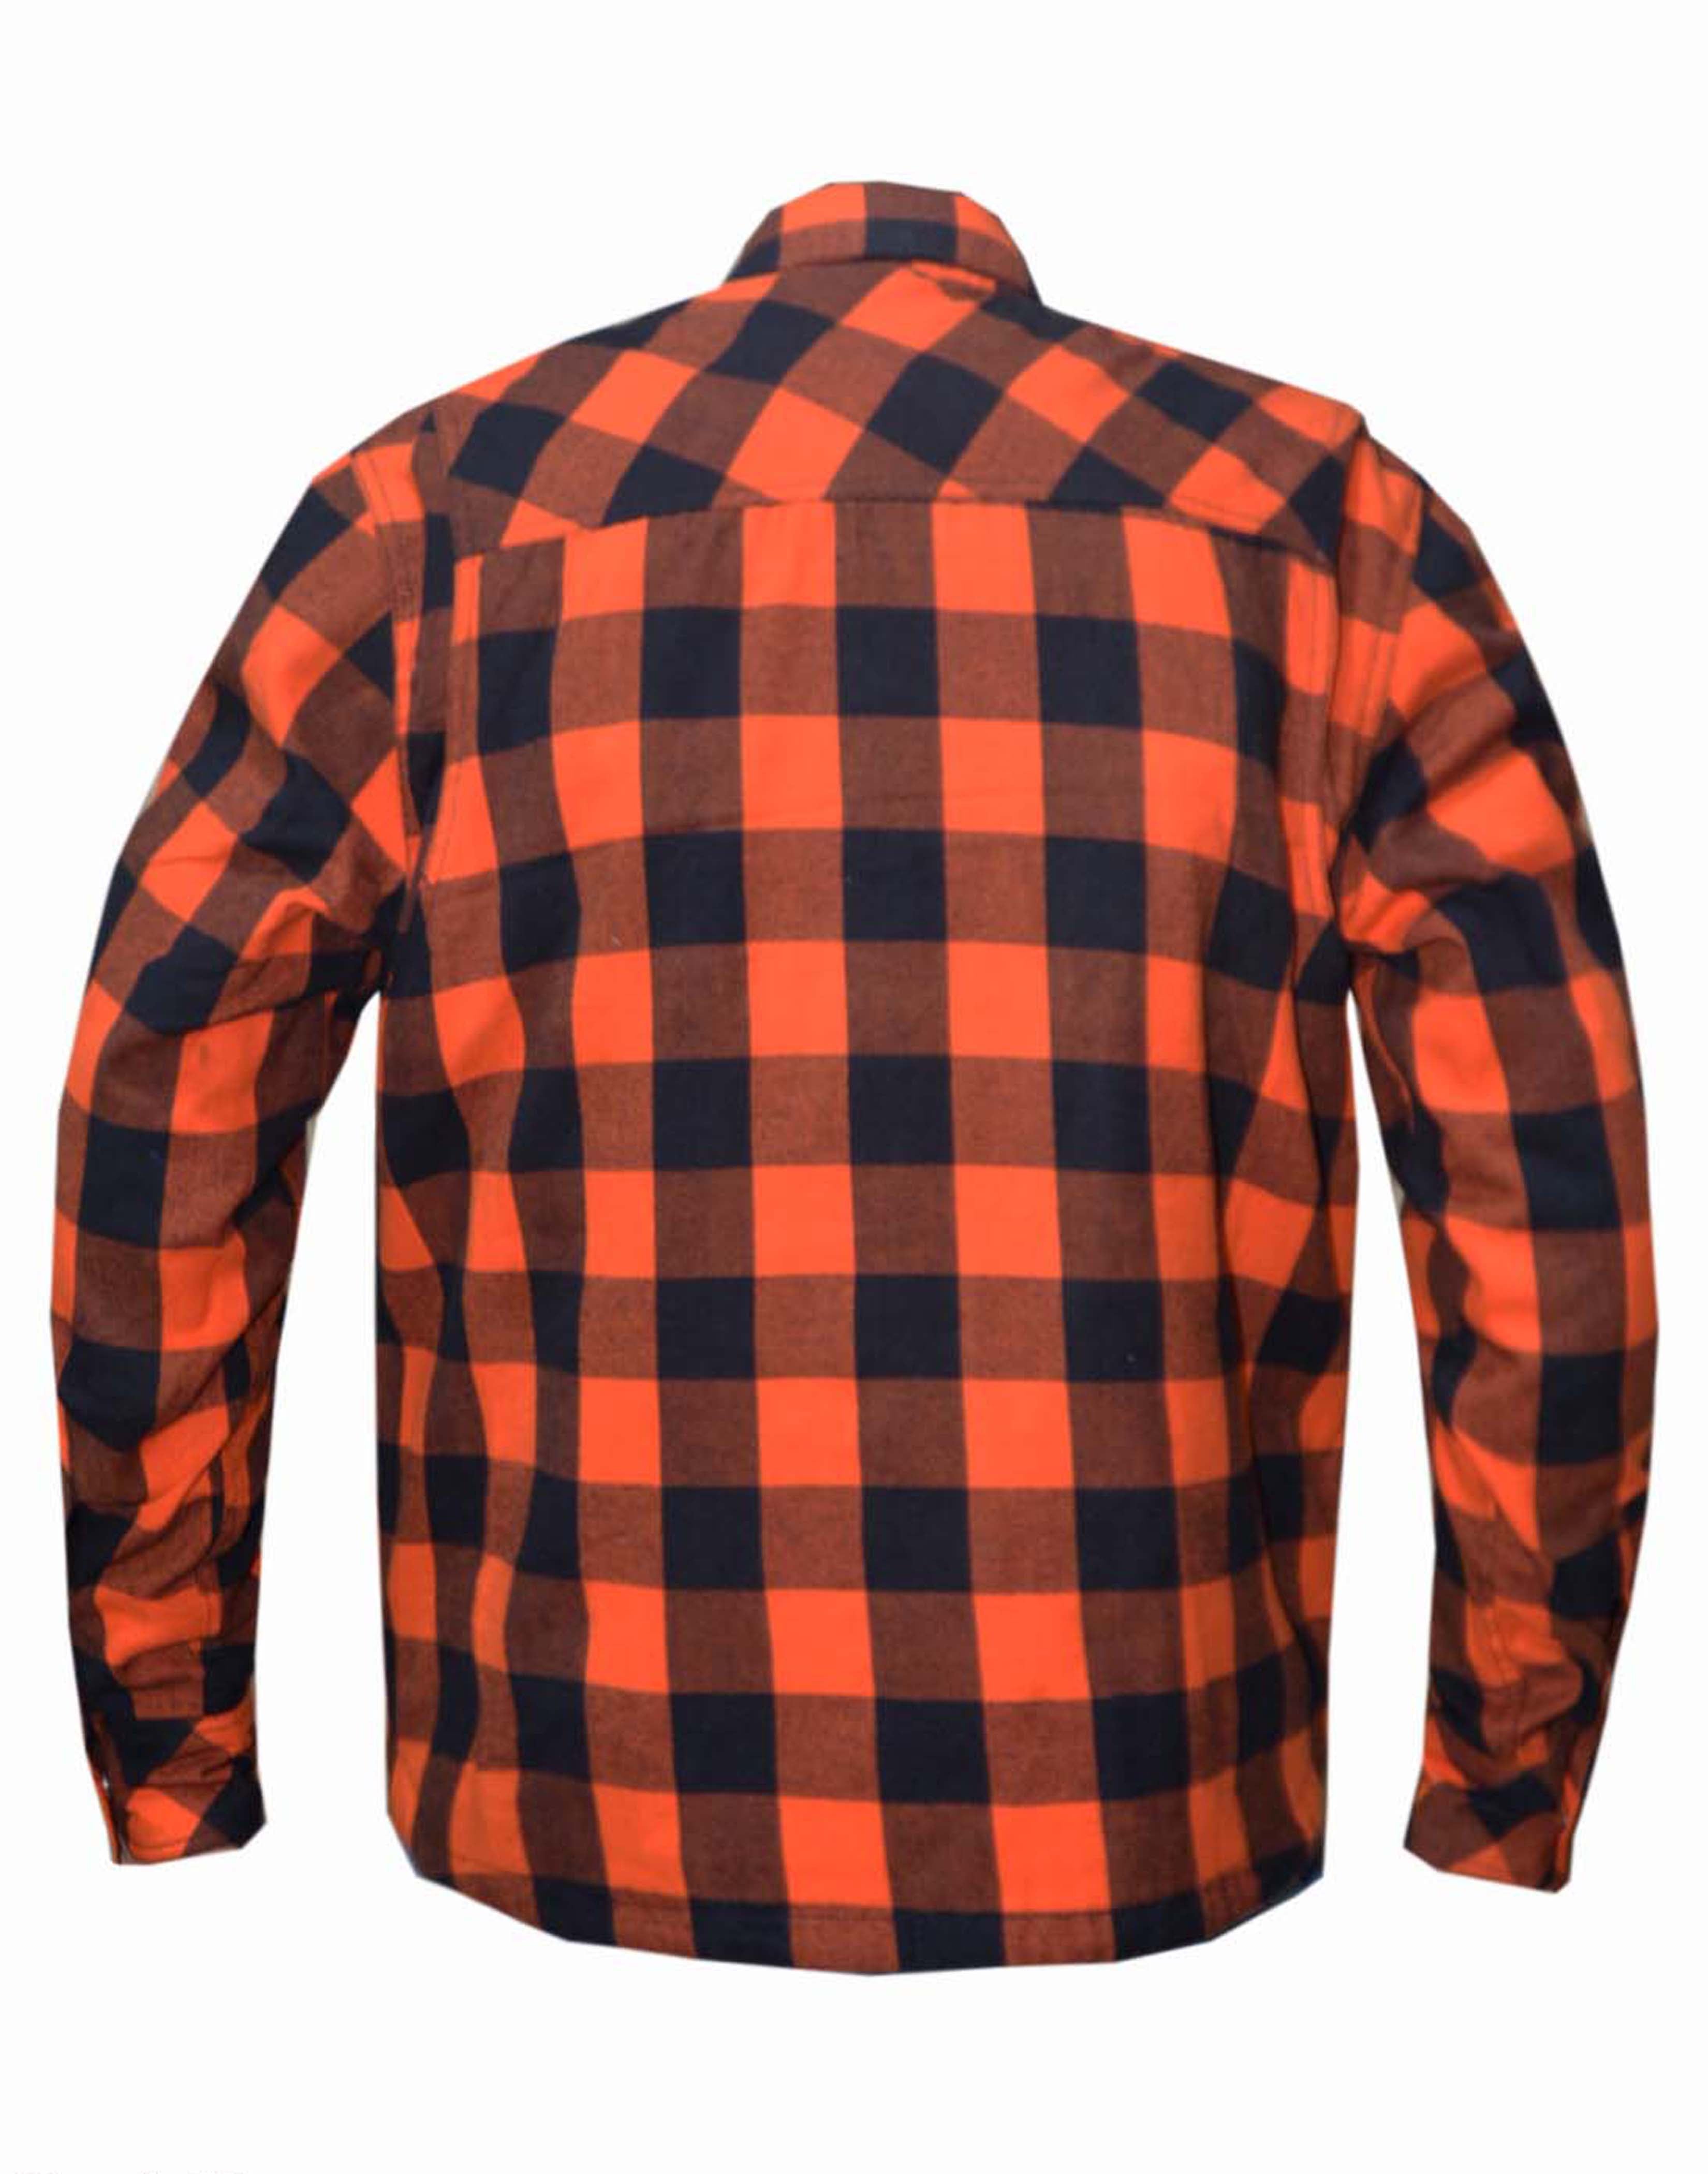 Unik International Mens Black and Orange Flannel Shirt